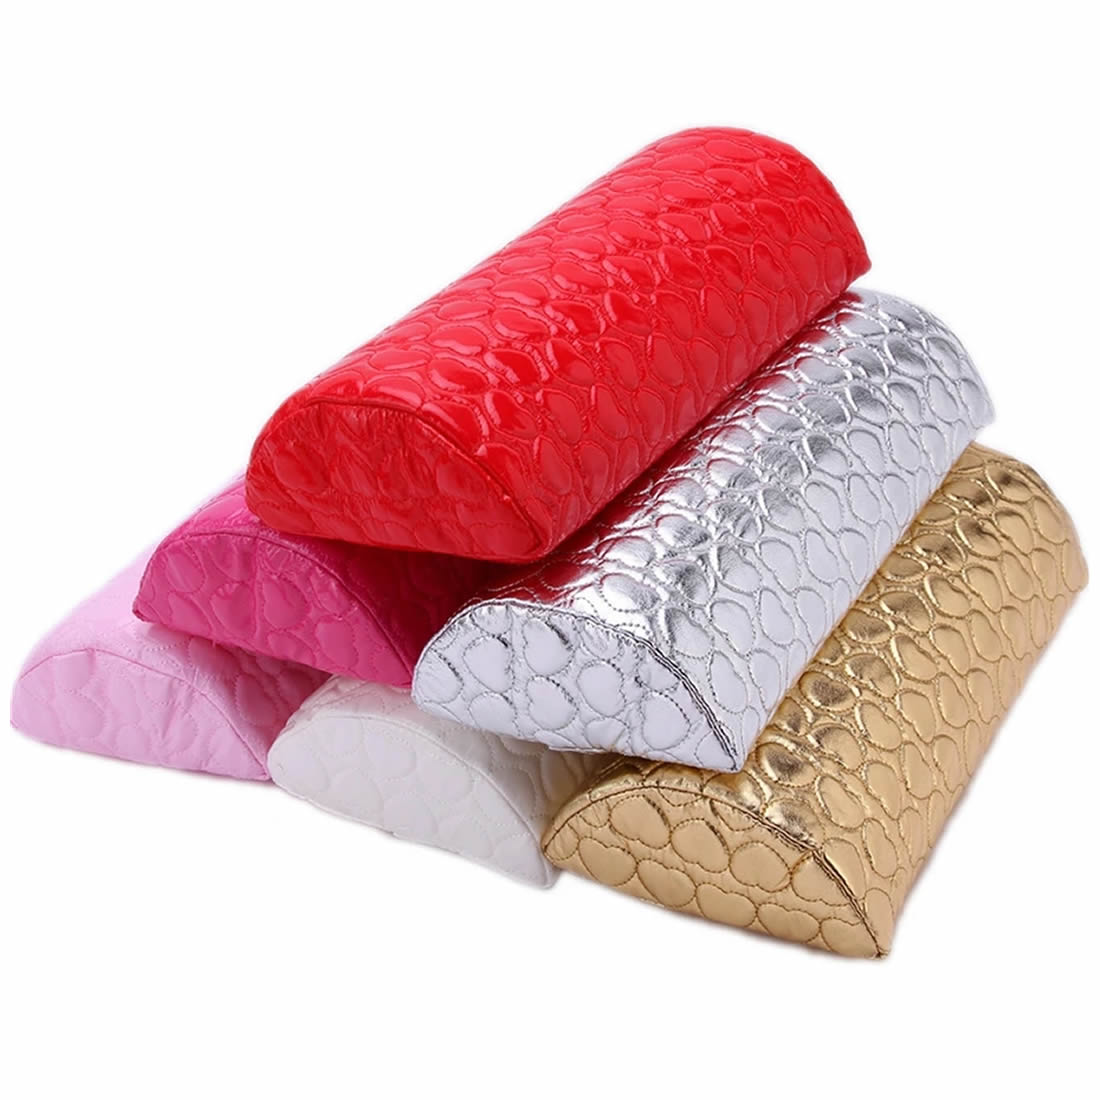 Gleevia Nail Art Hand Rest Cushion | Waterproof PU Cover Foam Pillow (Pack of 01)